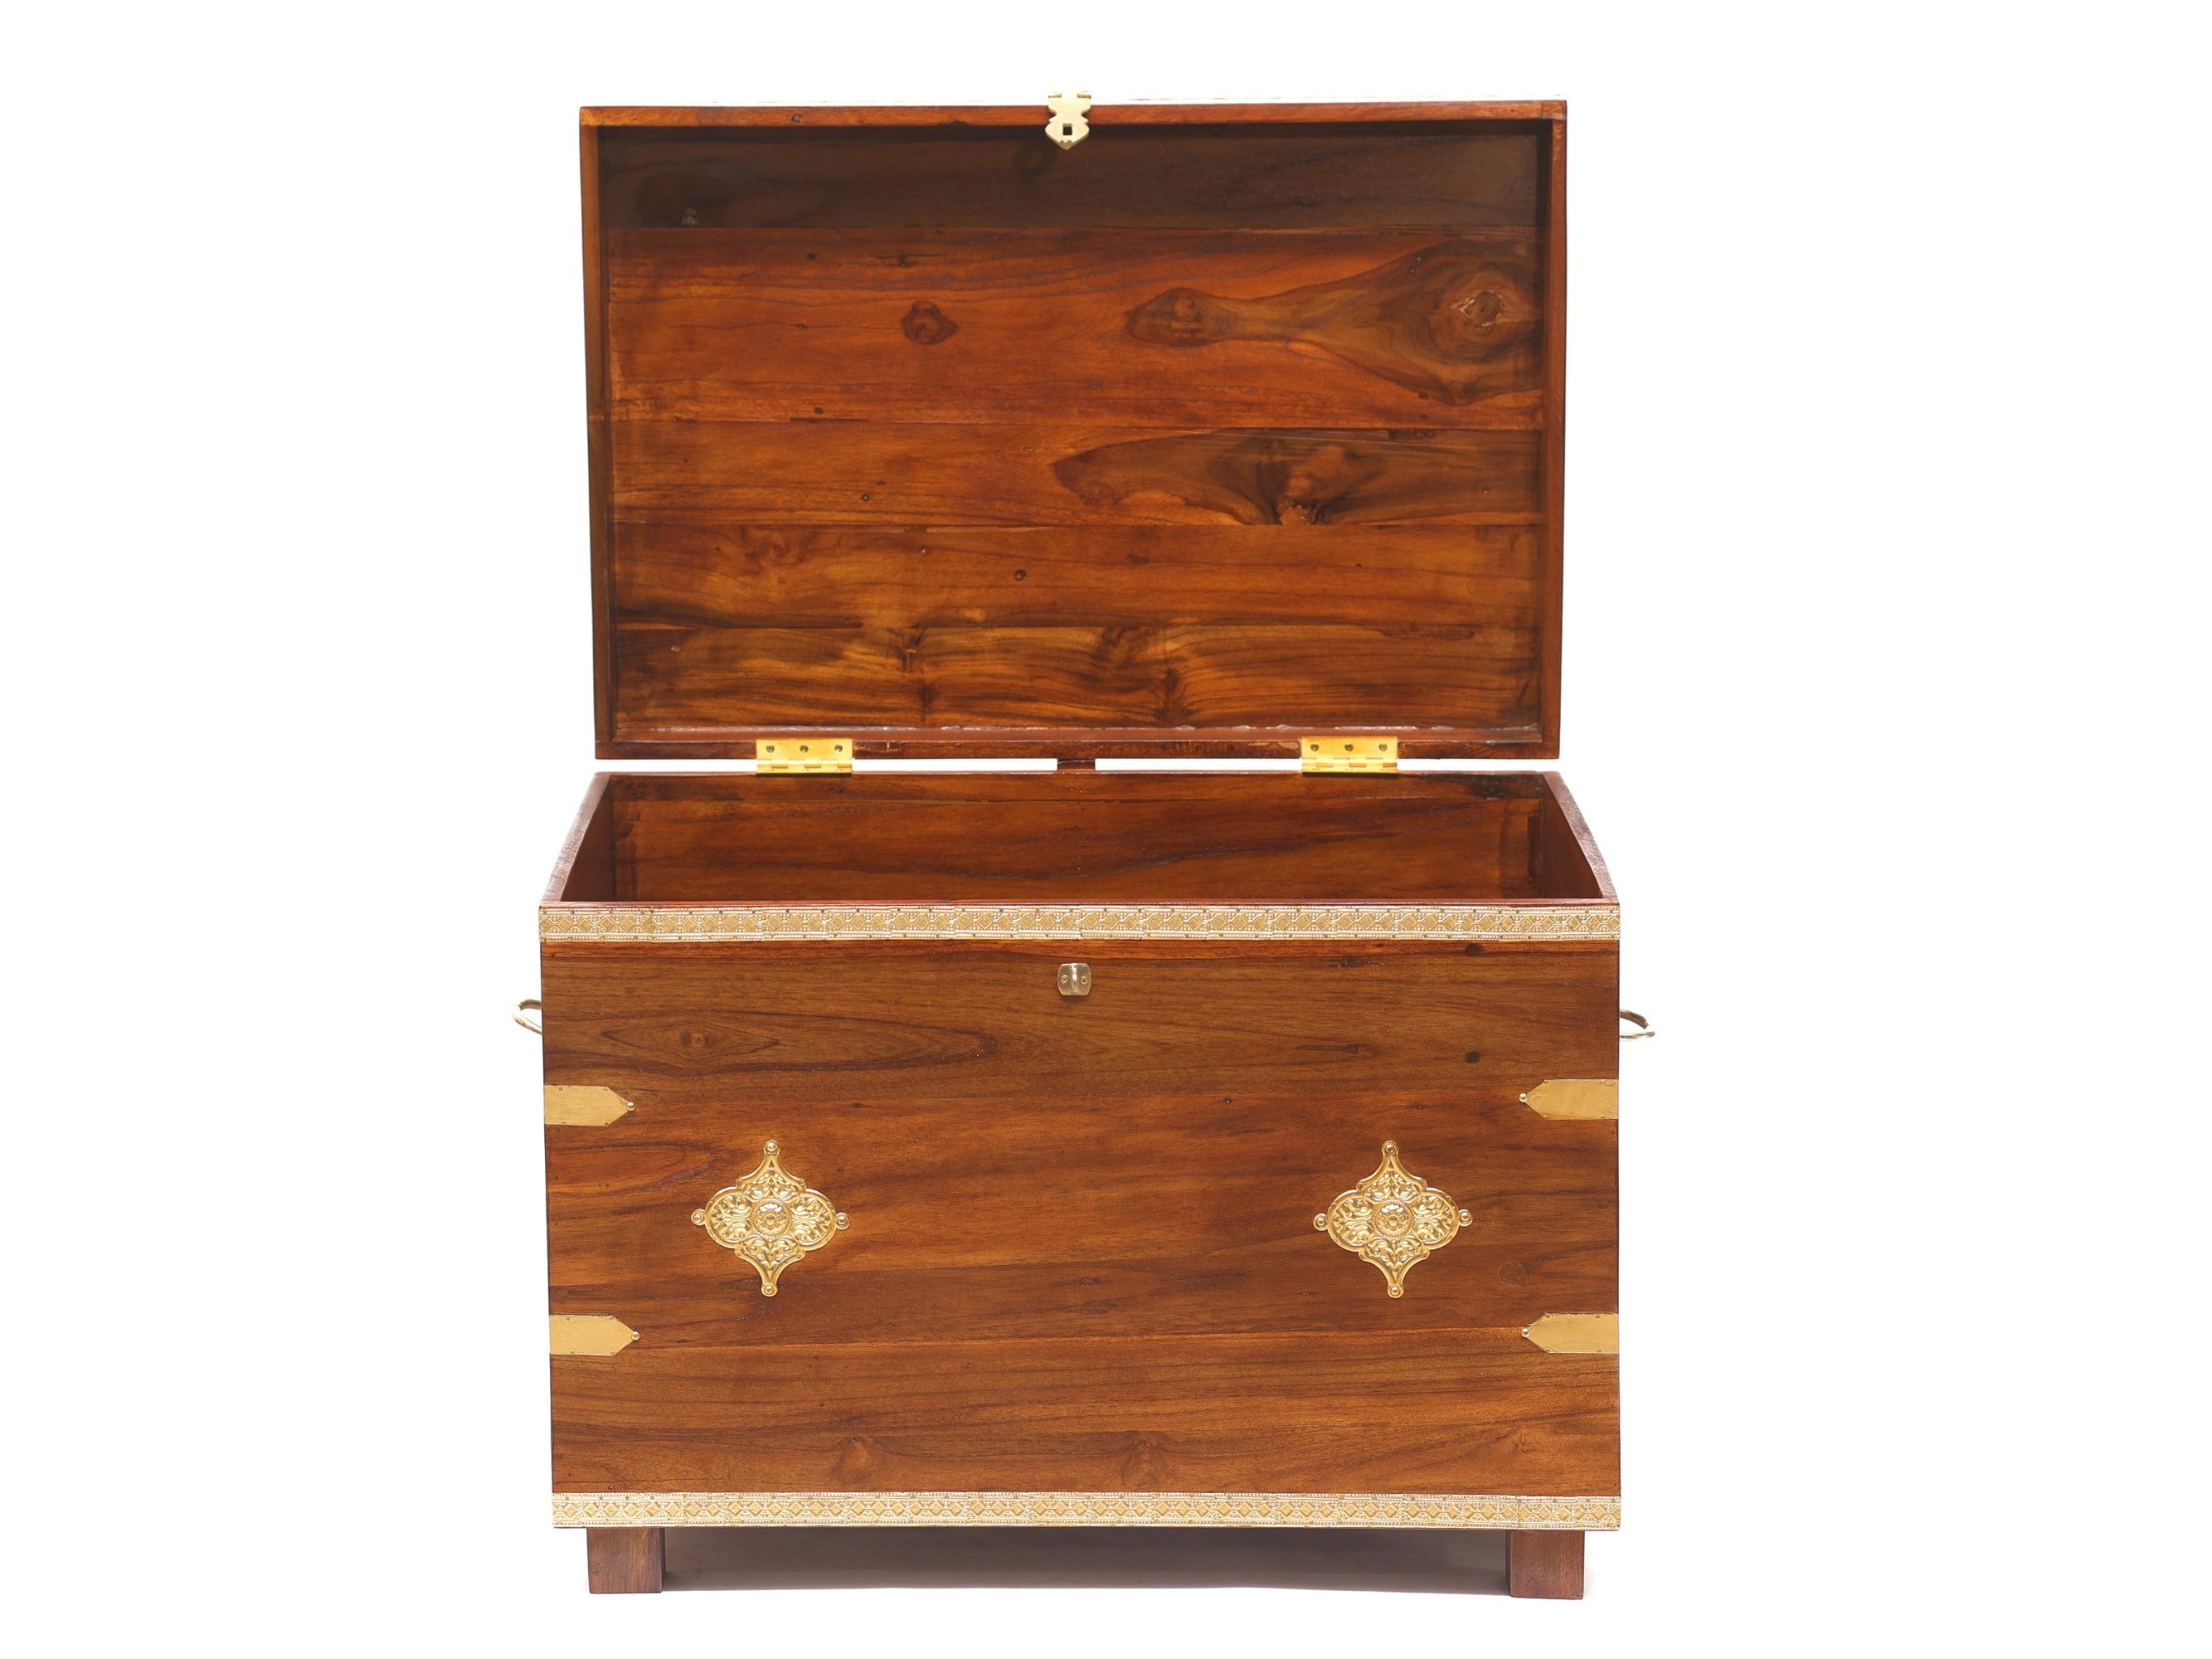 Teak wood Stylishly Trimmed Wooden Sanduk Wooden Box